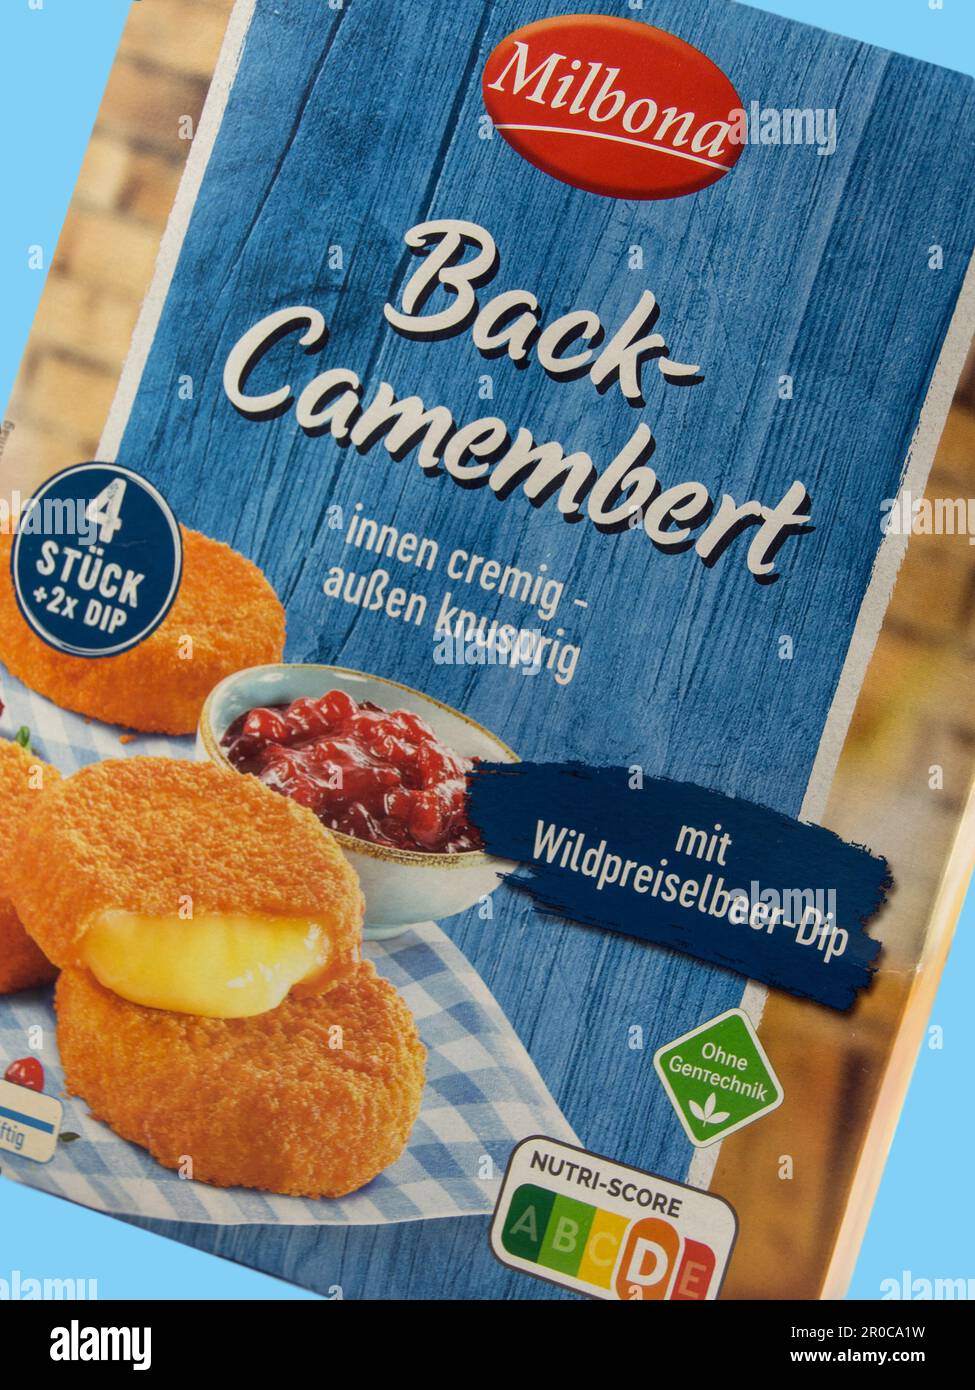 Stock Photo - Dip Back-Camembert mit Milbona Alamy Wildpreiselbeeren